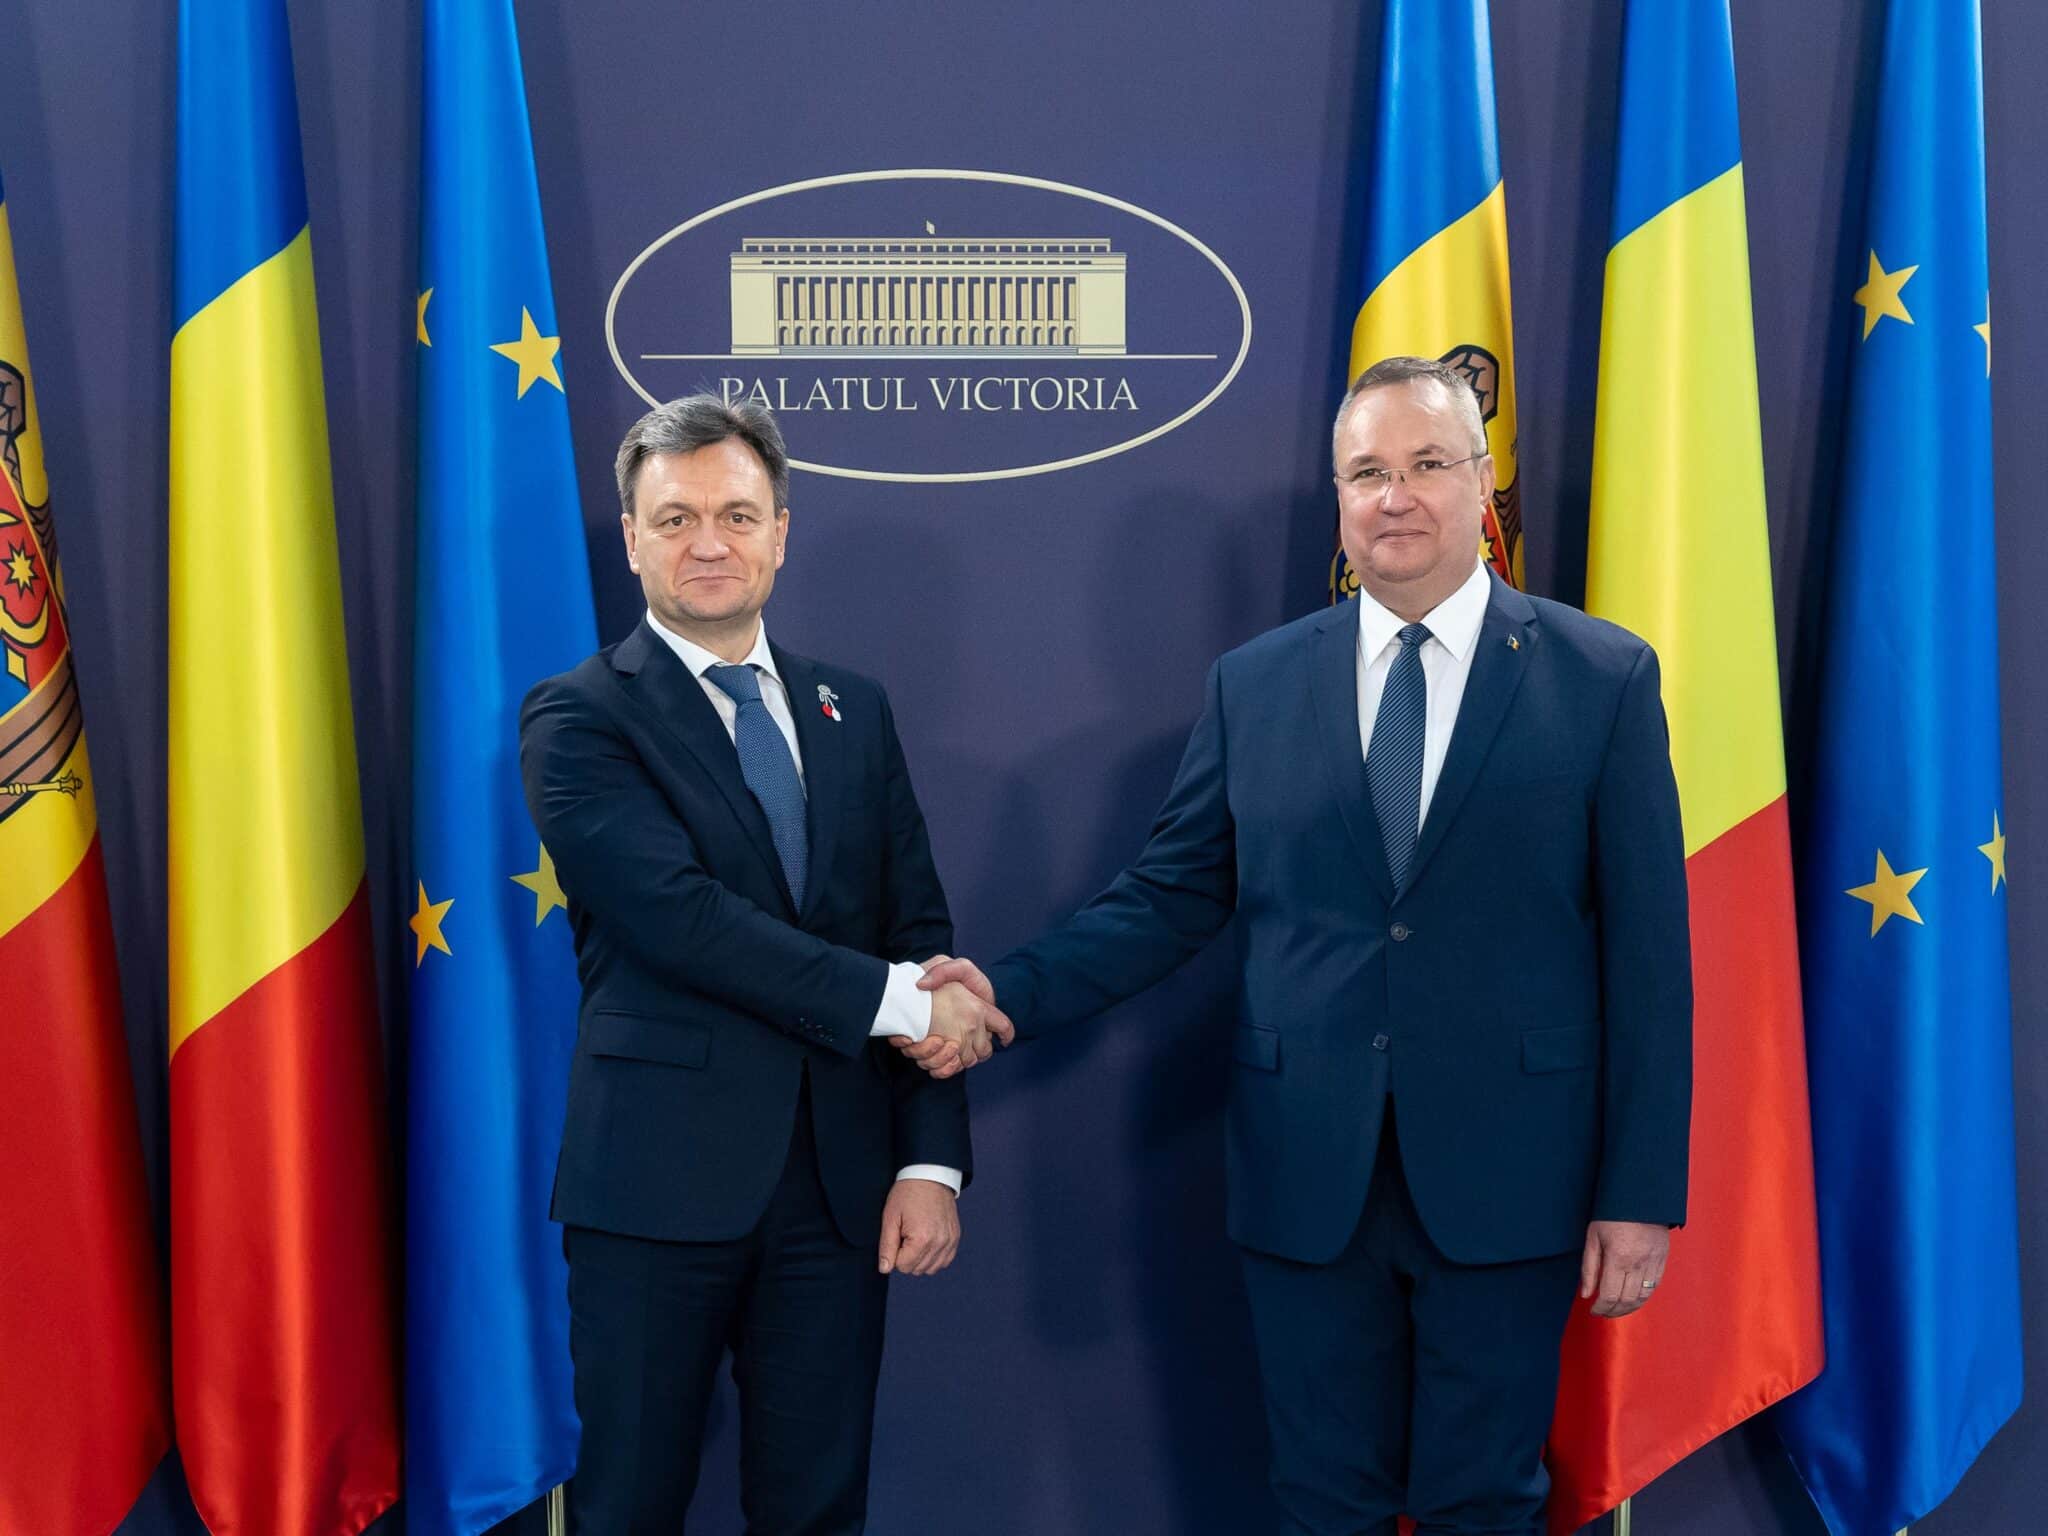 dorin-recean,-premierul-republicii-moldova,-aflat-la-prima-vizita-oficiala-in-romania.-discutii-cu-prim-ministrul-nicolae-ciuca